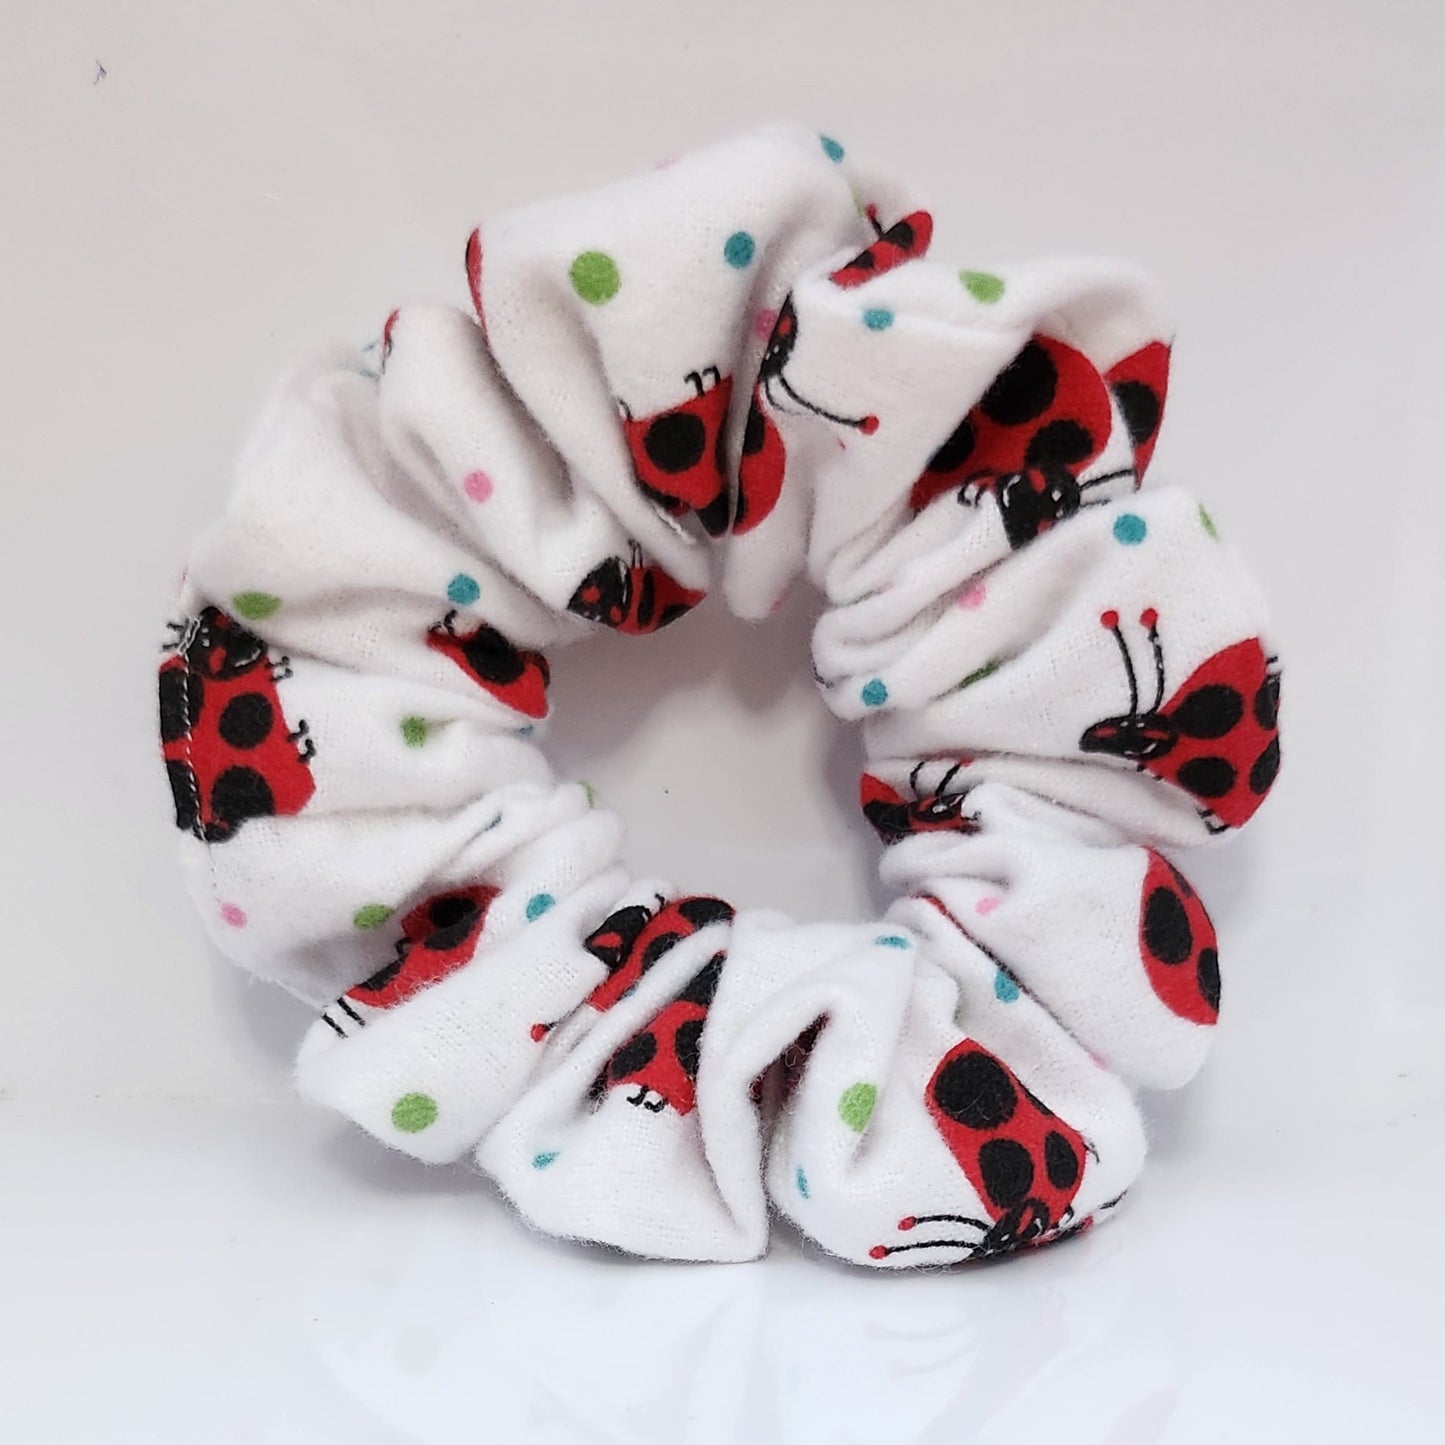 Handmade scrunchies